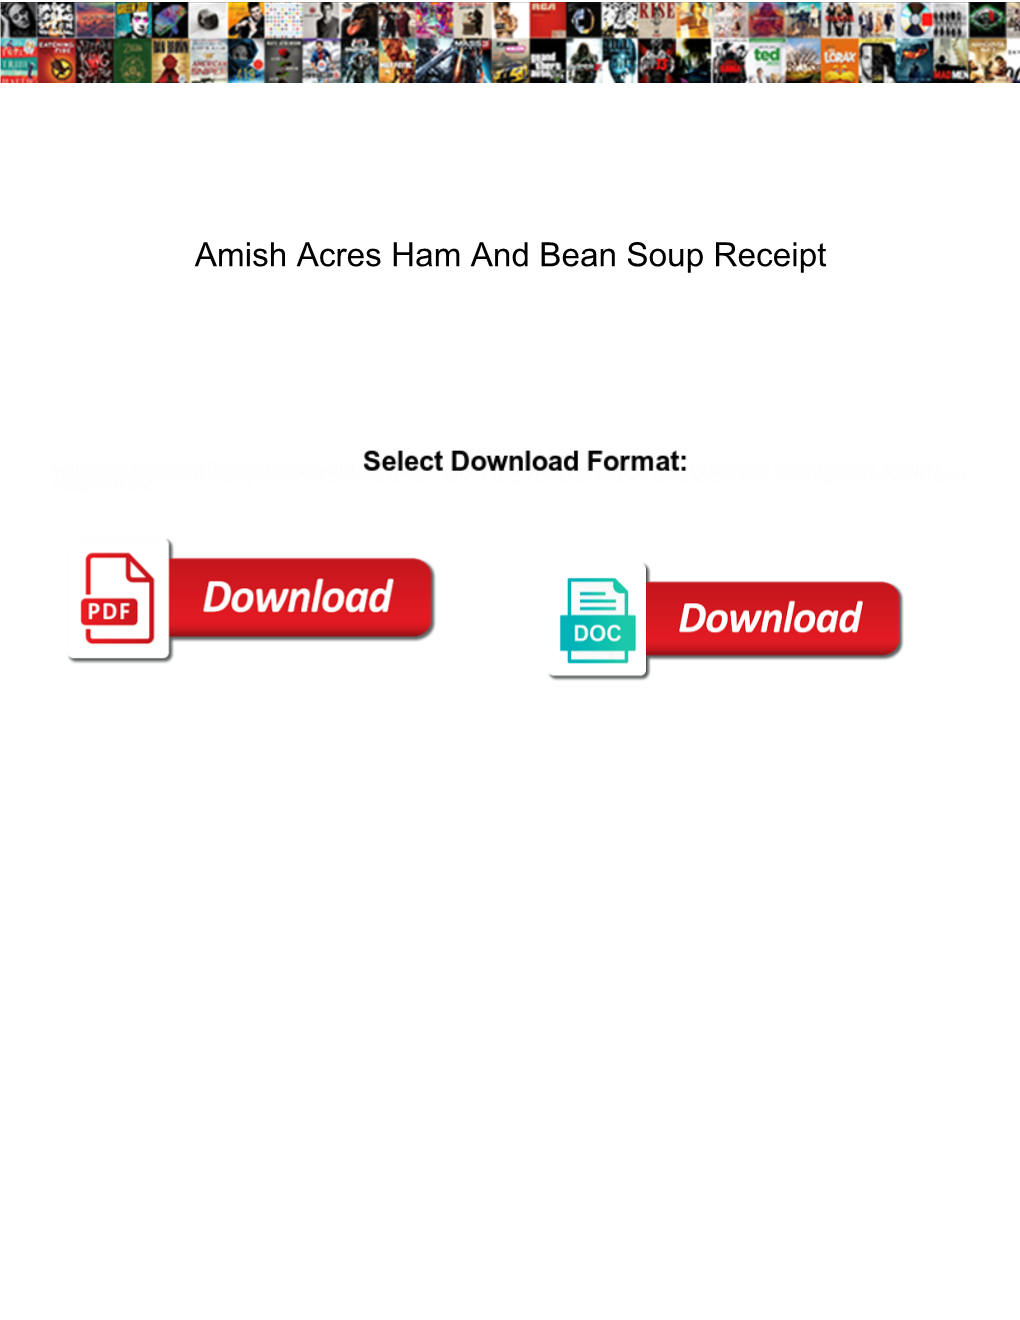 Amish Acres Ham and Bean Soup Receipt